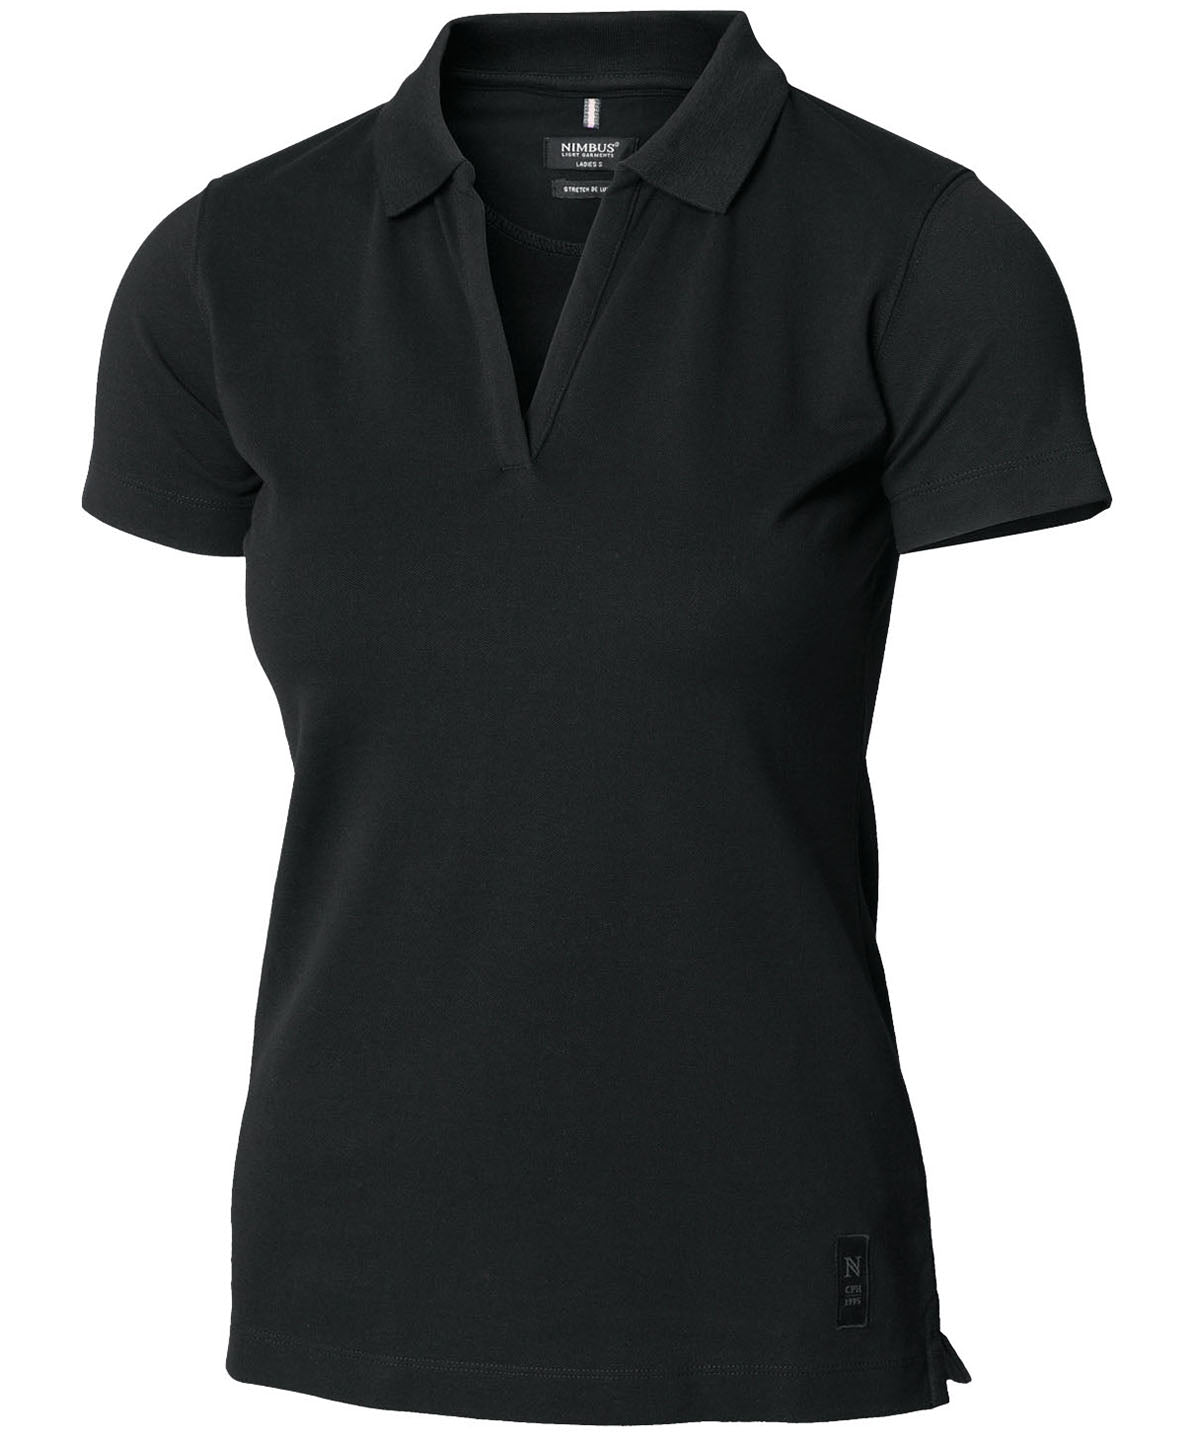 Nimbus Women's Harvard stretch deluxe polo shirt NB52F - COOZO